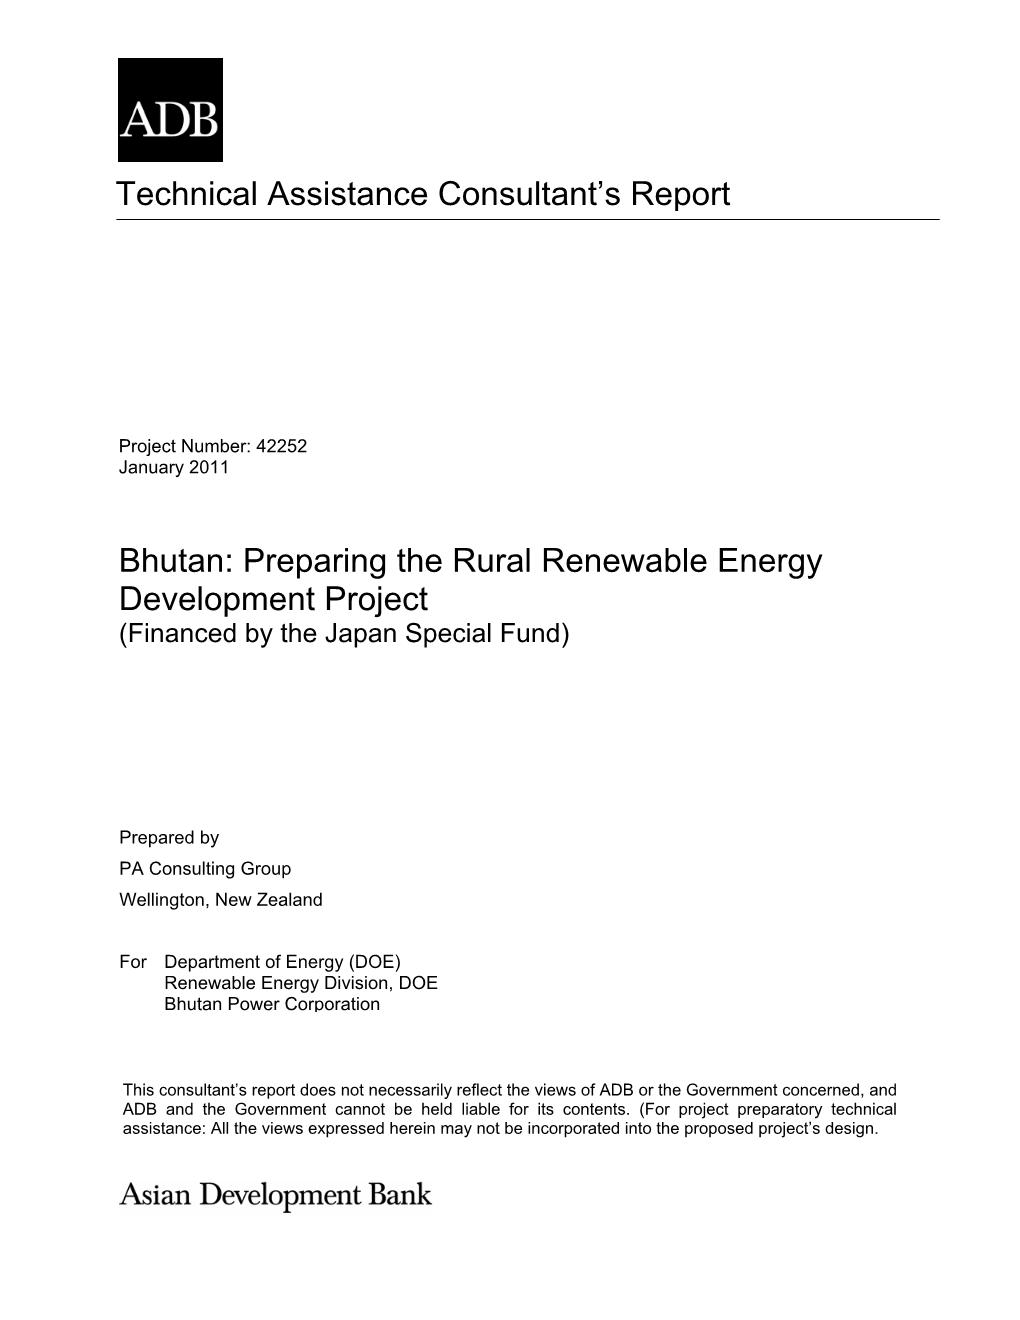 TACR: Bhutan: Preparing the Rural Renewable Energy Development